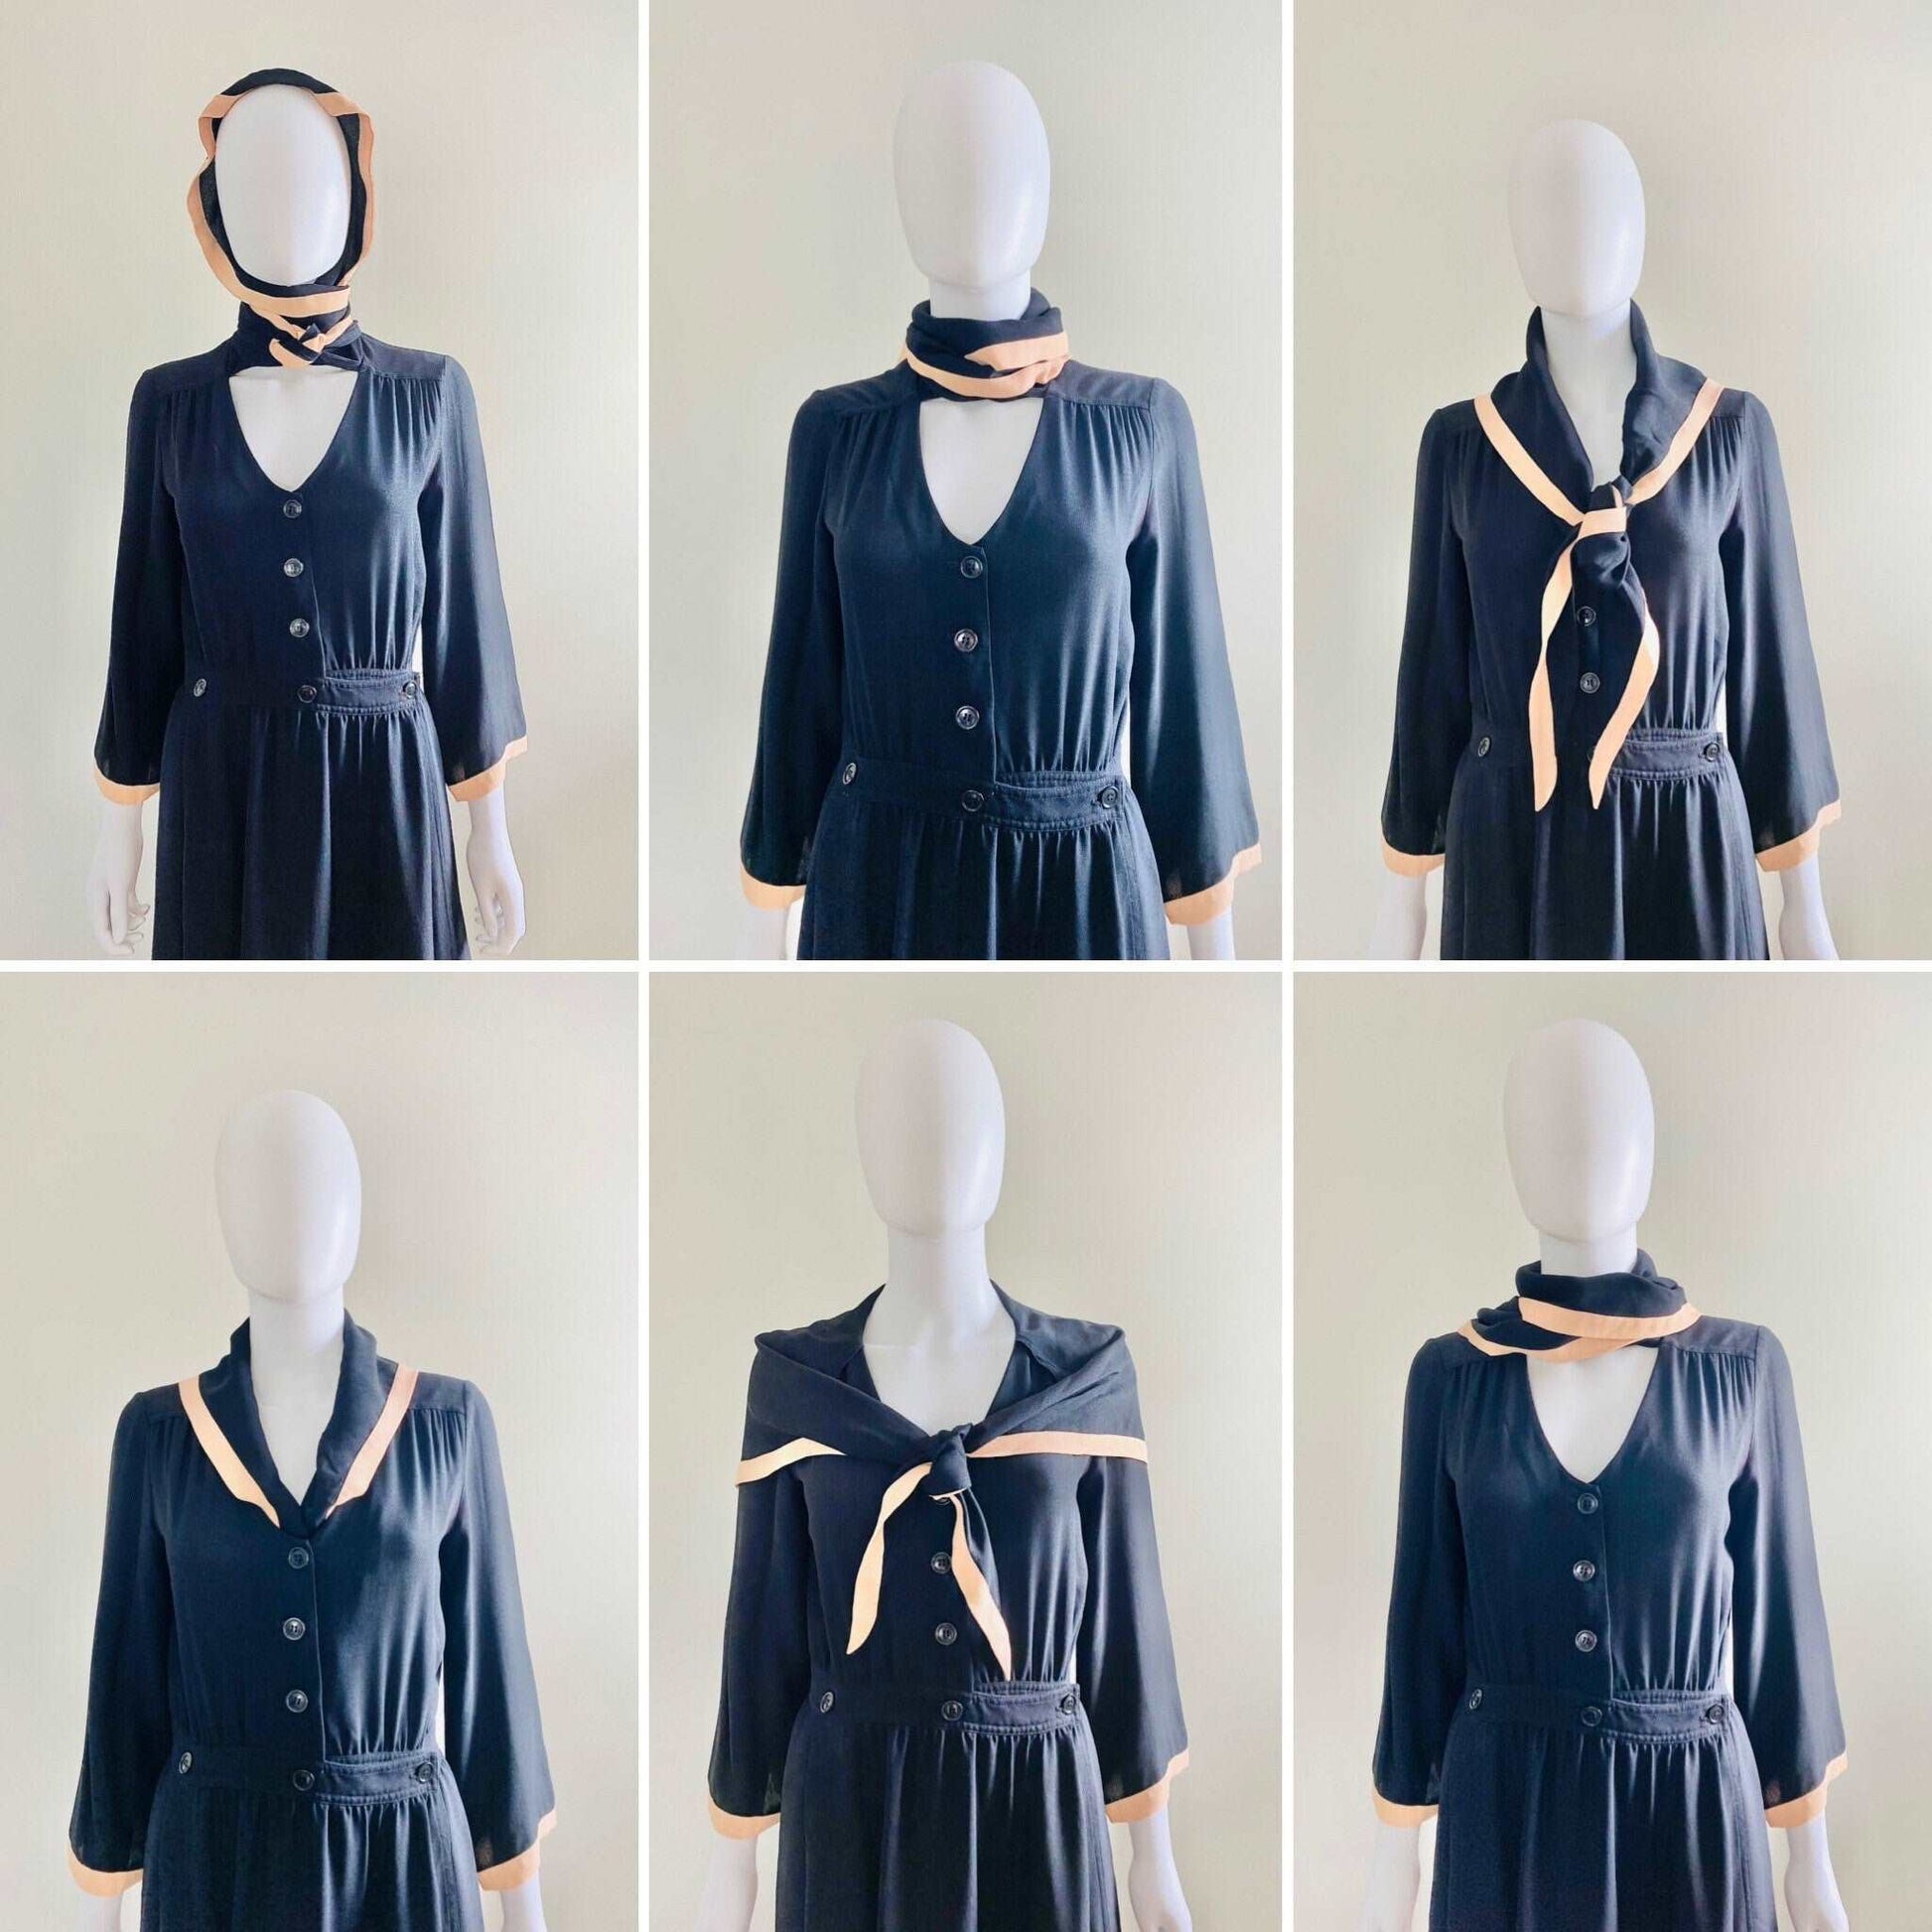 Vintage 1940s Hooded Rayon Crepe Black Dress / 1970s does 1940s convertible Albert Nipon Dress Size M L